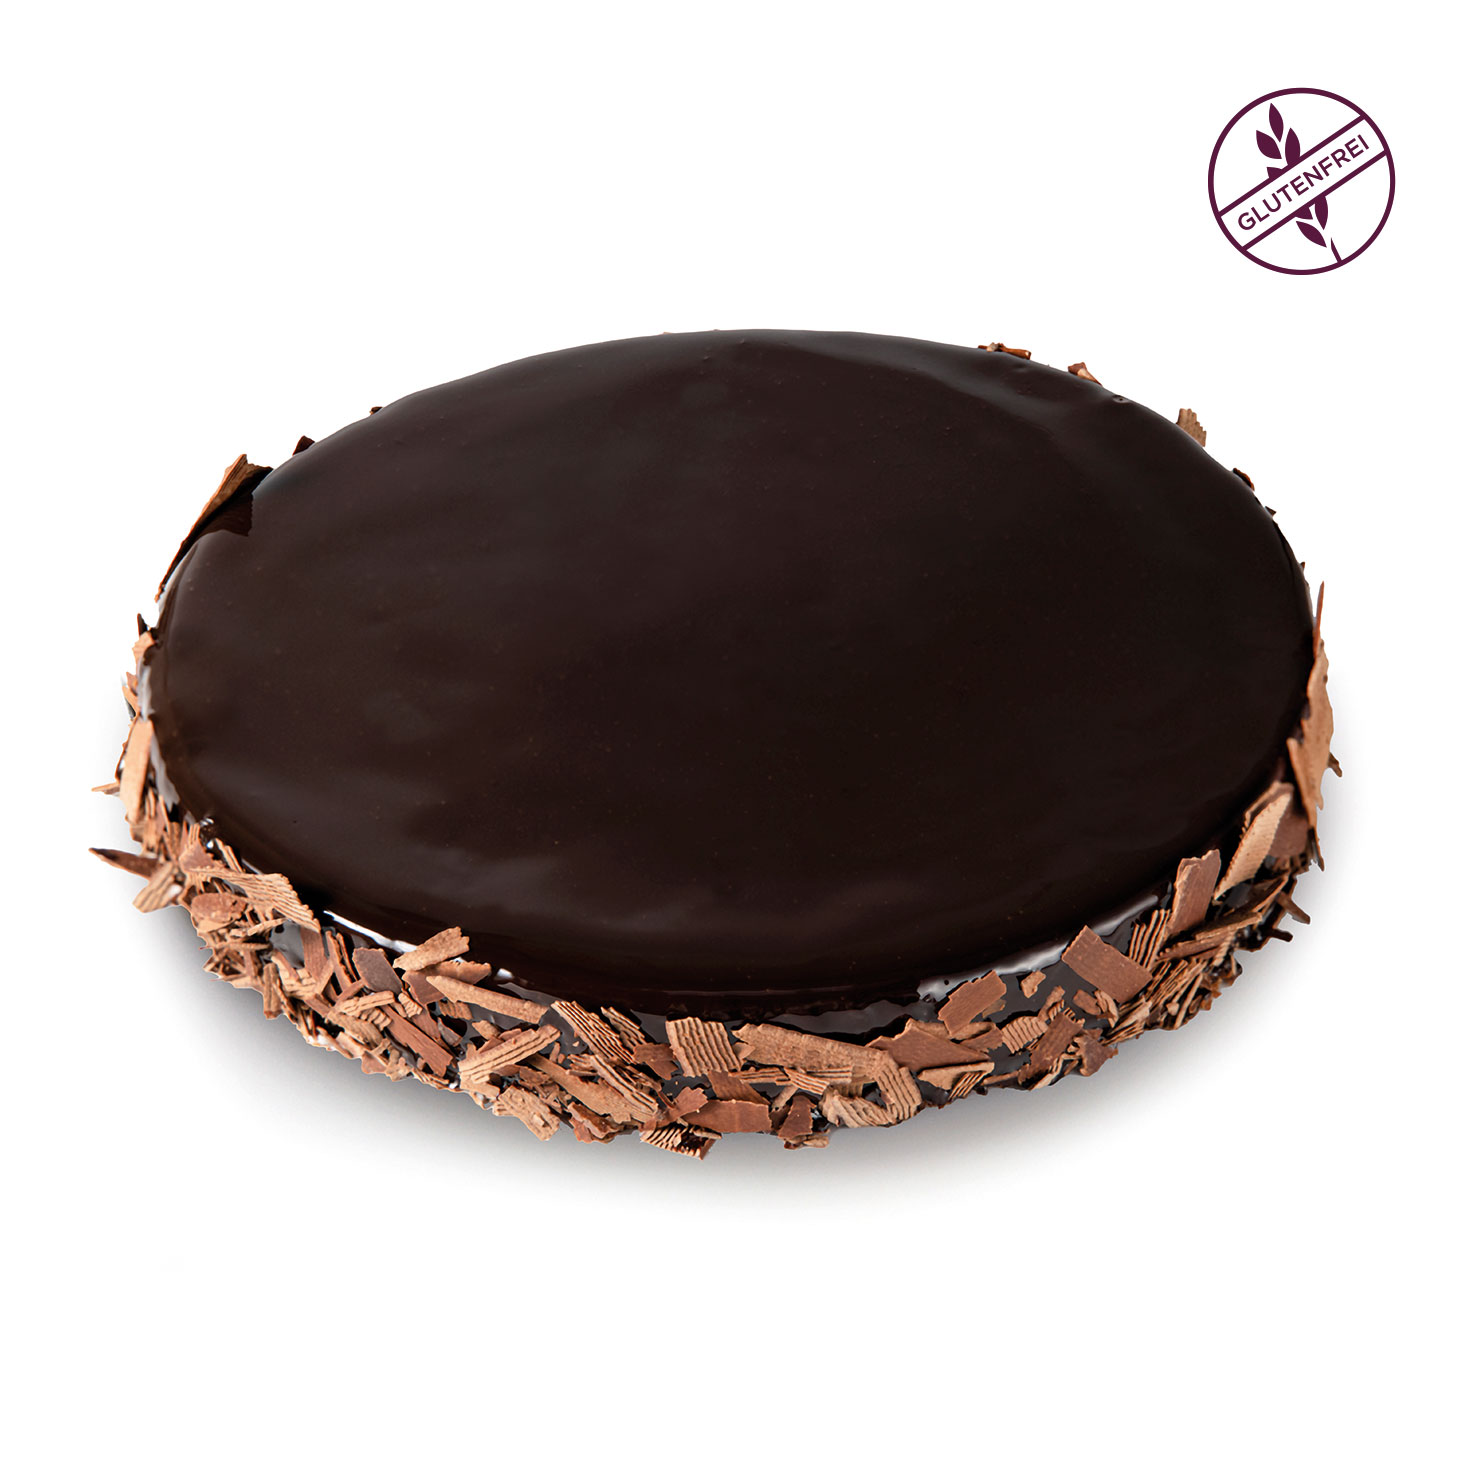 Mousse-au-Chocolat-Torte